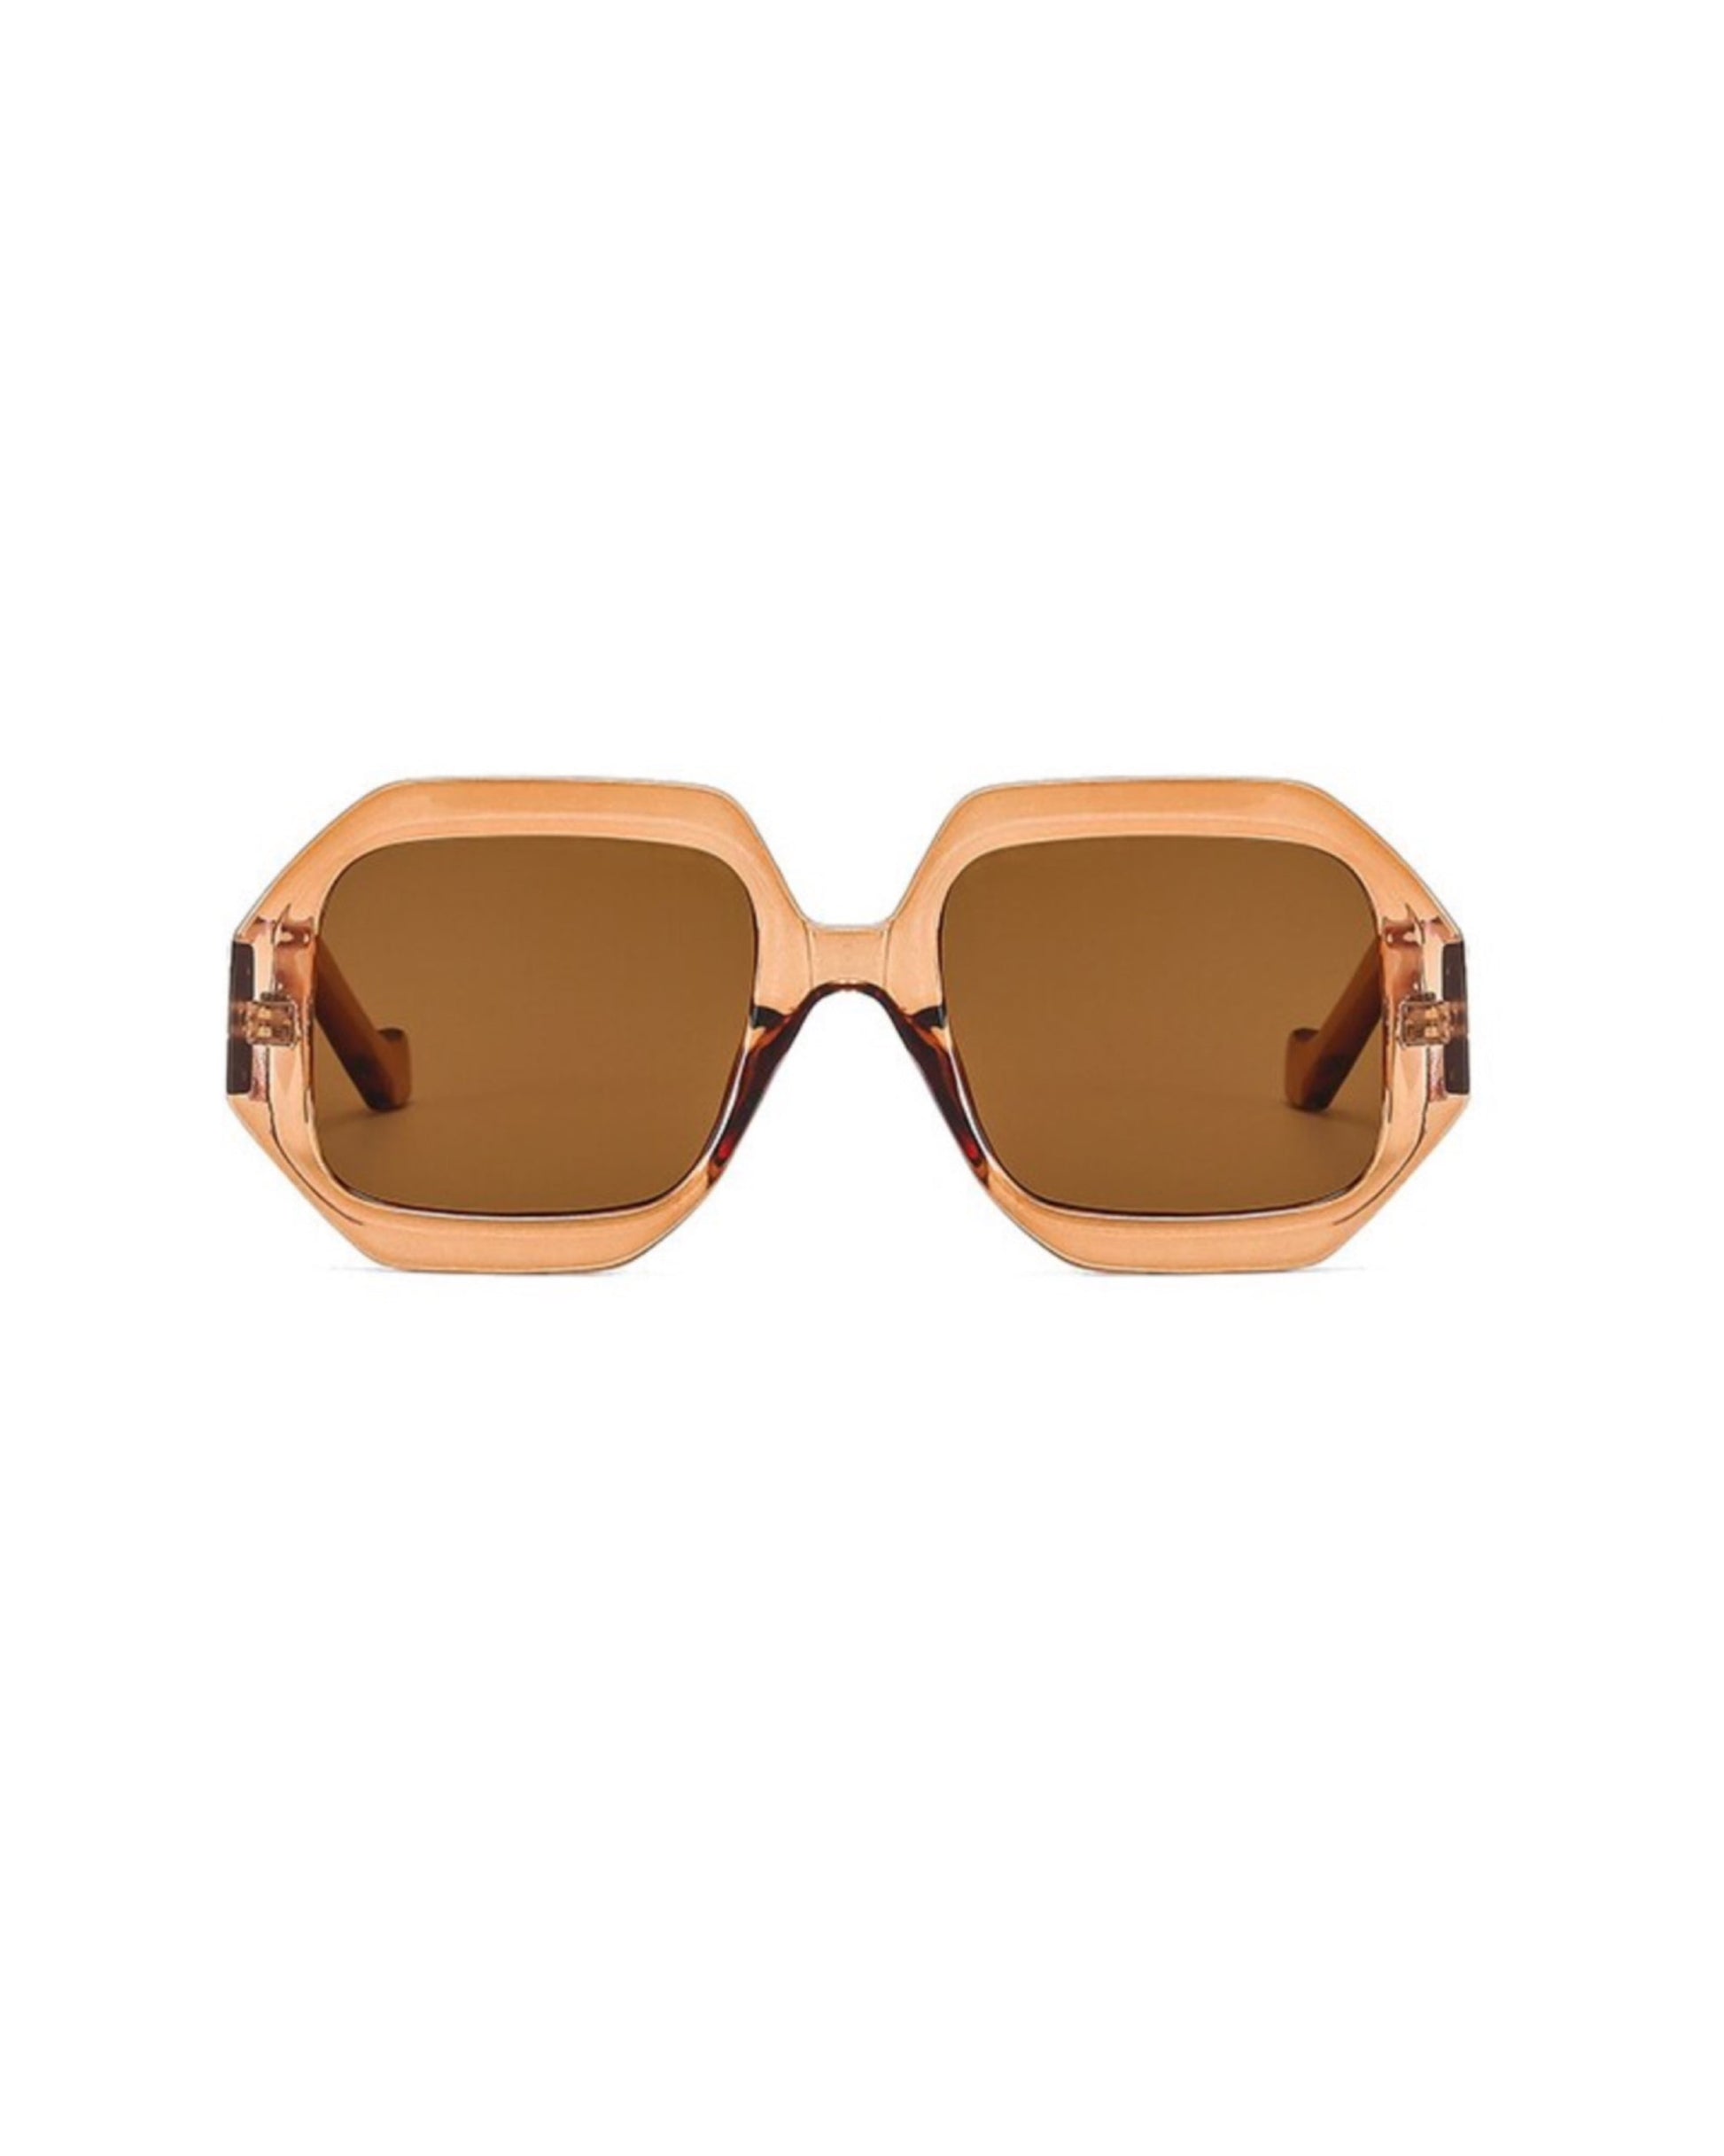 Céline Bridge Sunglasses | Celine glasses, Hexagon sunglasses, Celine  sunglasses